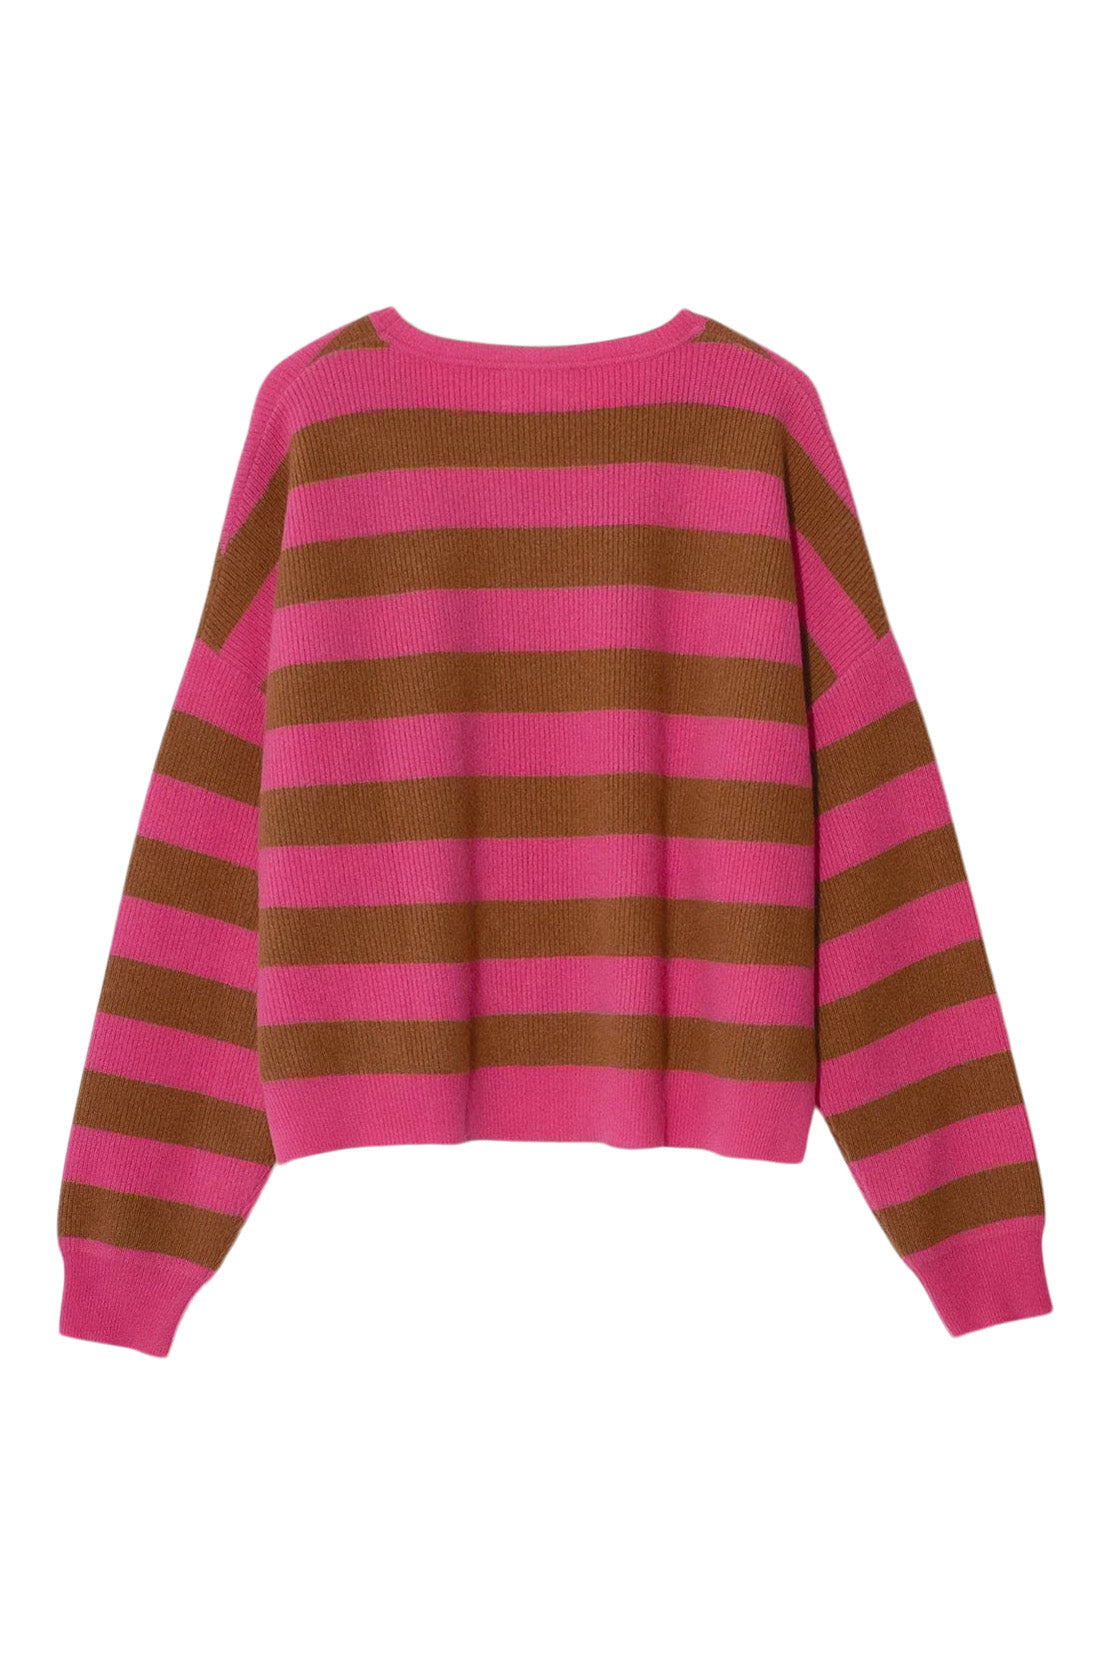 Xirena Coco Cashmere Sweater in Berry Tart